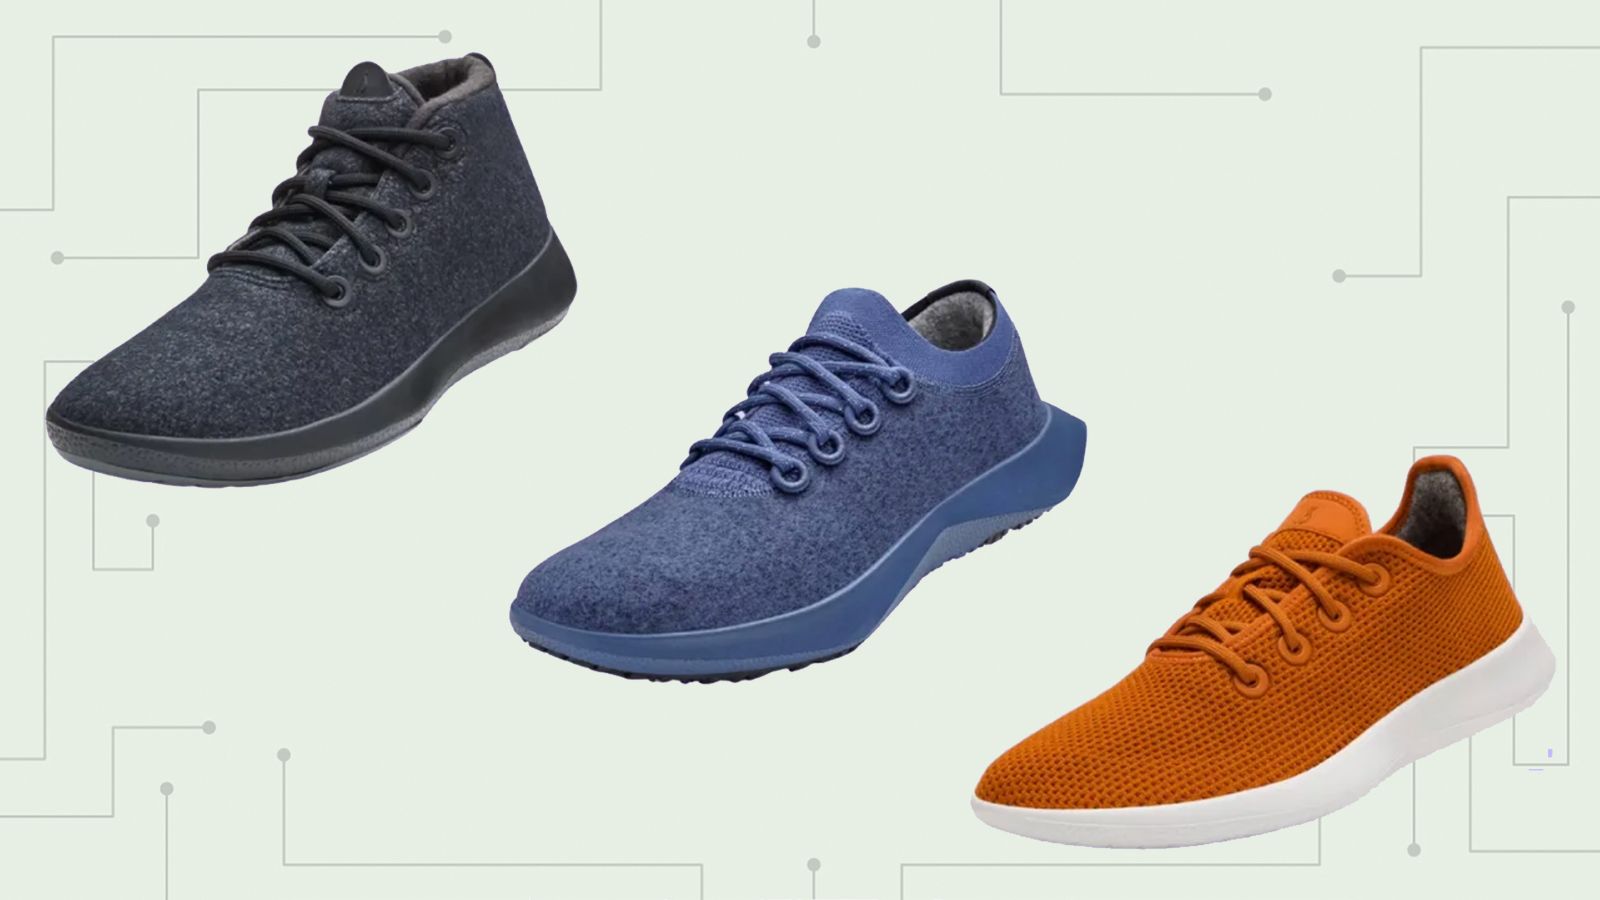 Allbirds Riser Review: Eco-Friendly, Retro-Inspired Sneakers